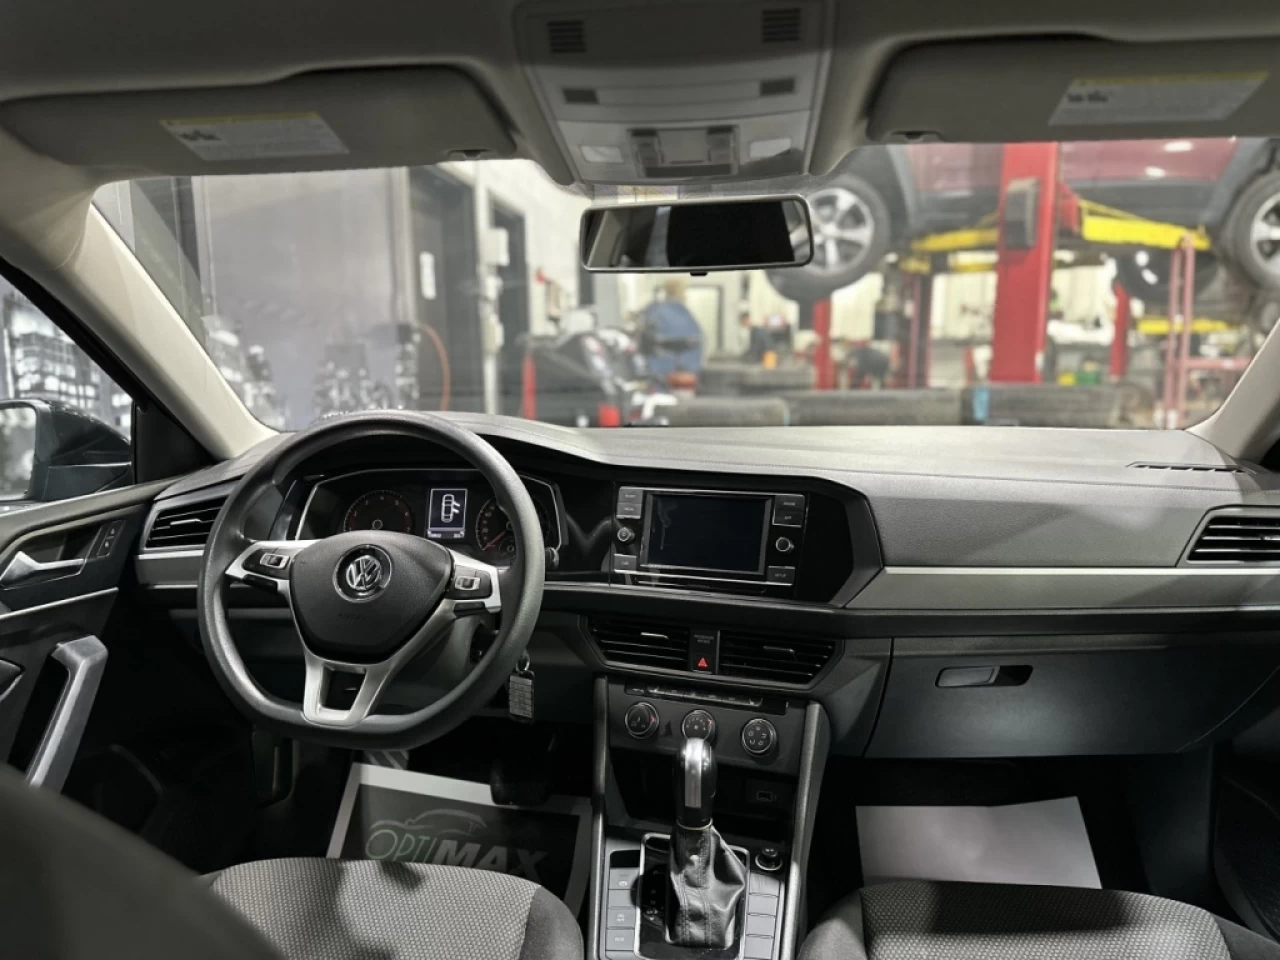 2019 Volkswagen Jetta COMFORTLINE AUTOMATIQUE SEULEMENT 111 000KM Main Image